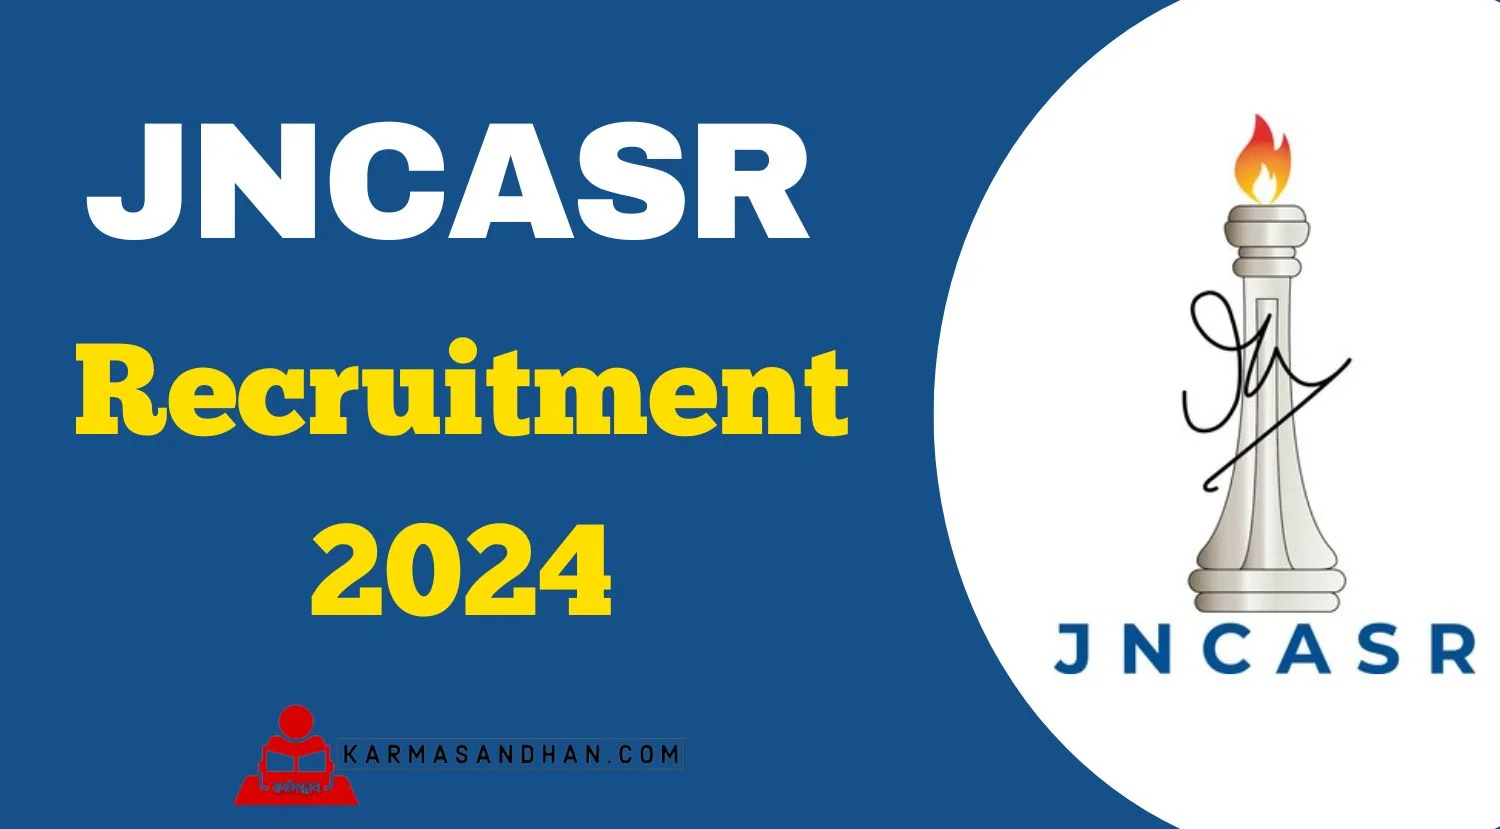 JNCASR President Recruitment 2024